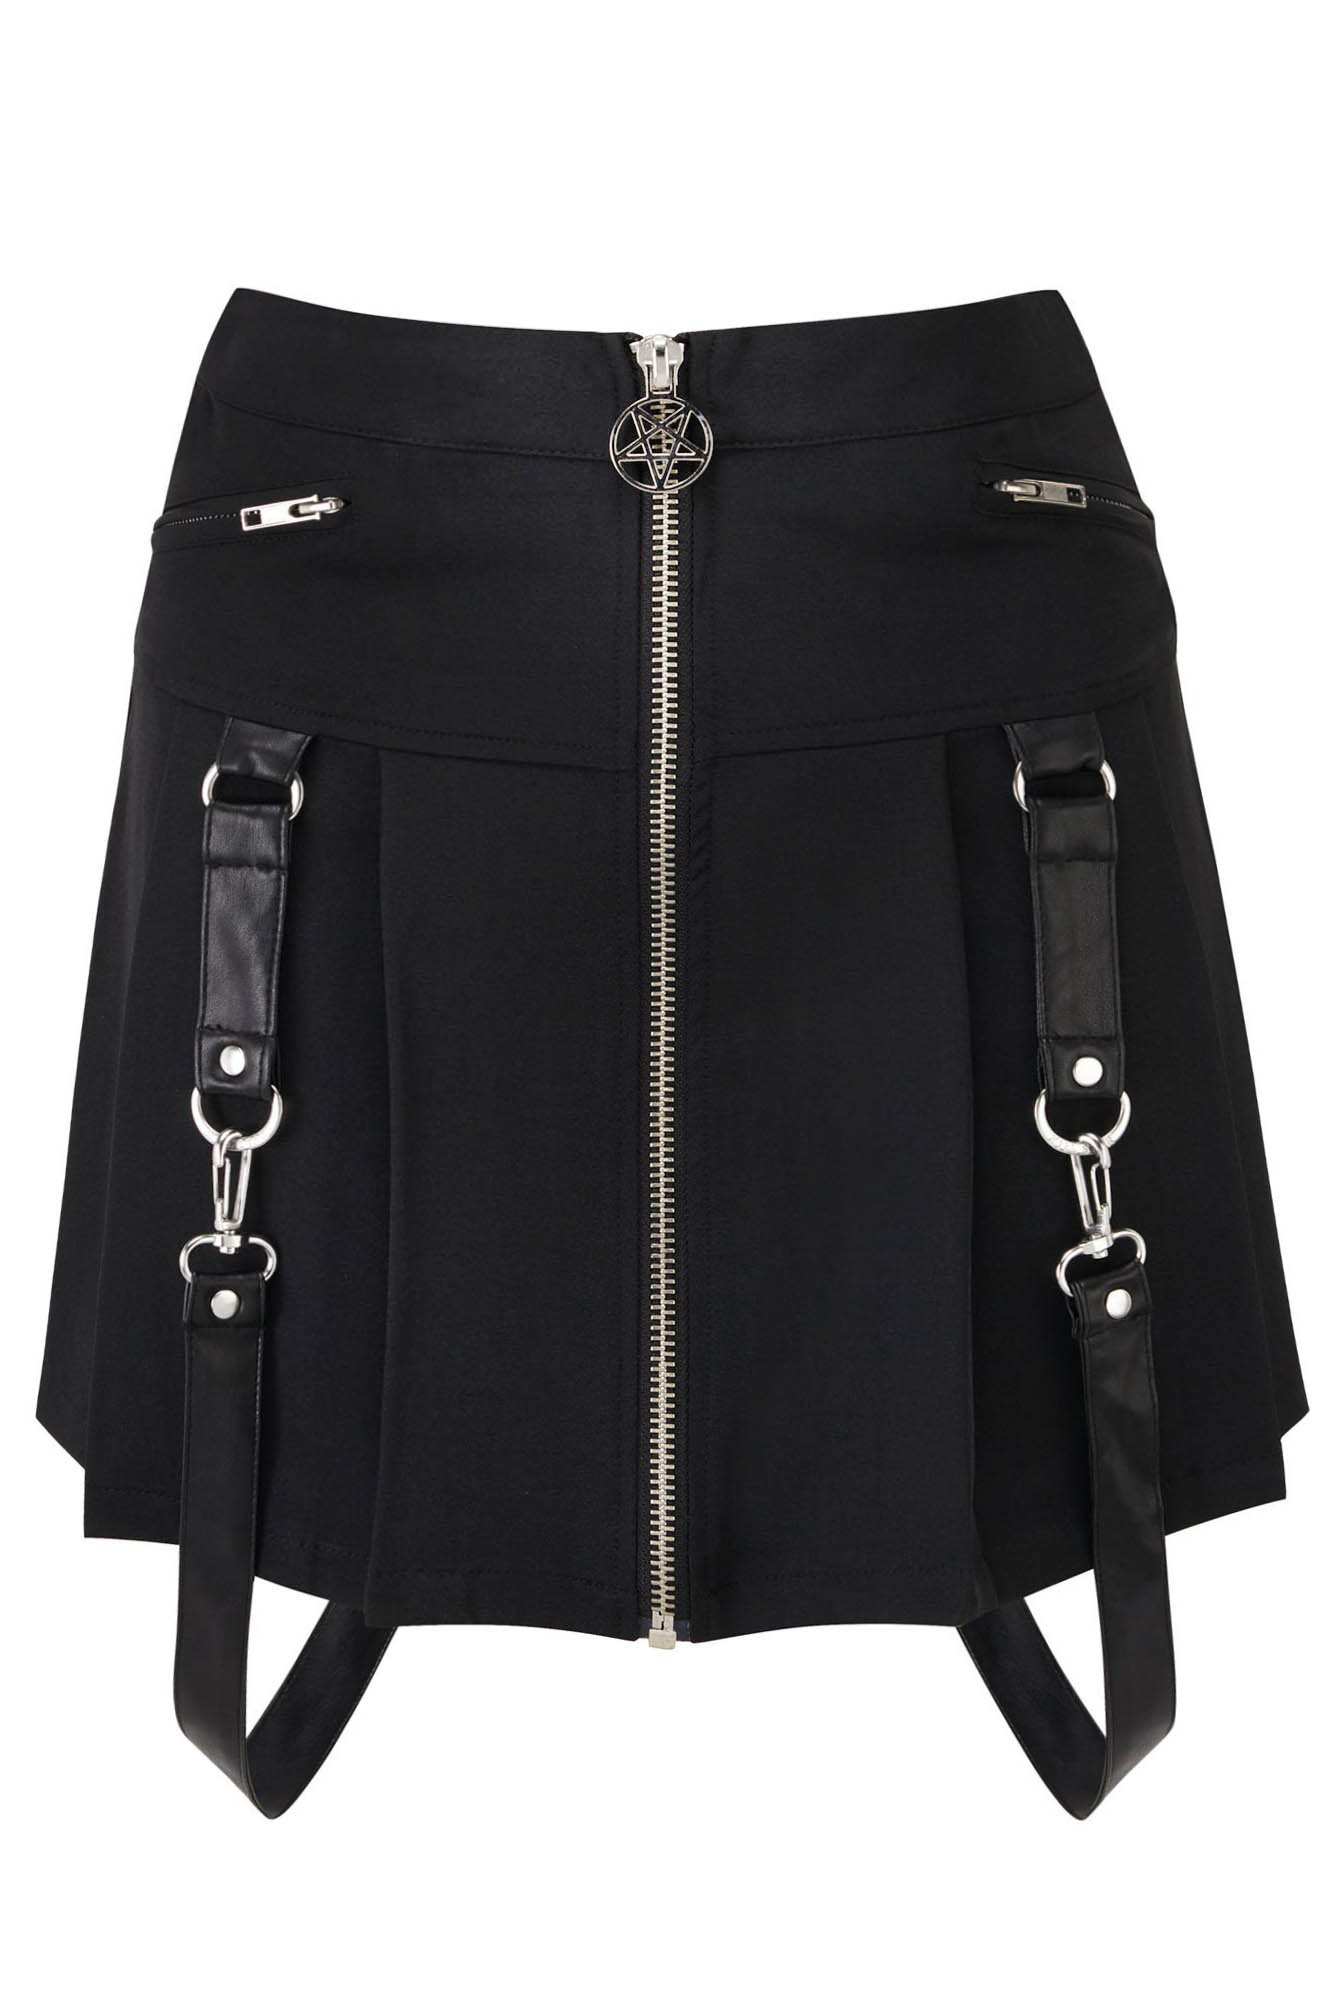 Blaire B*tch Black Mini Skirt – DeadRockers